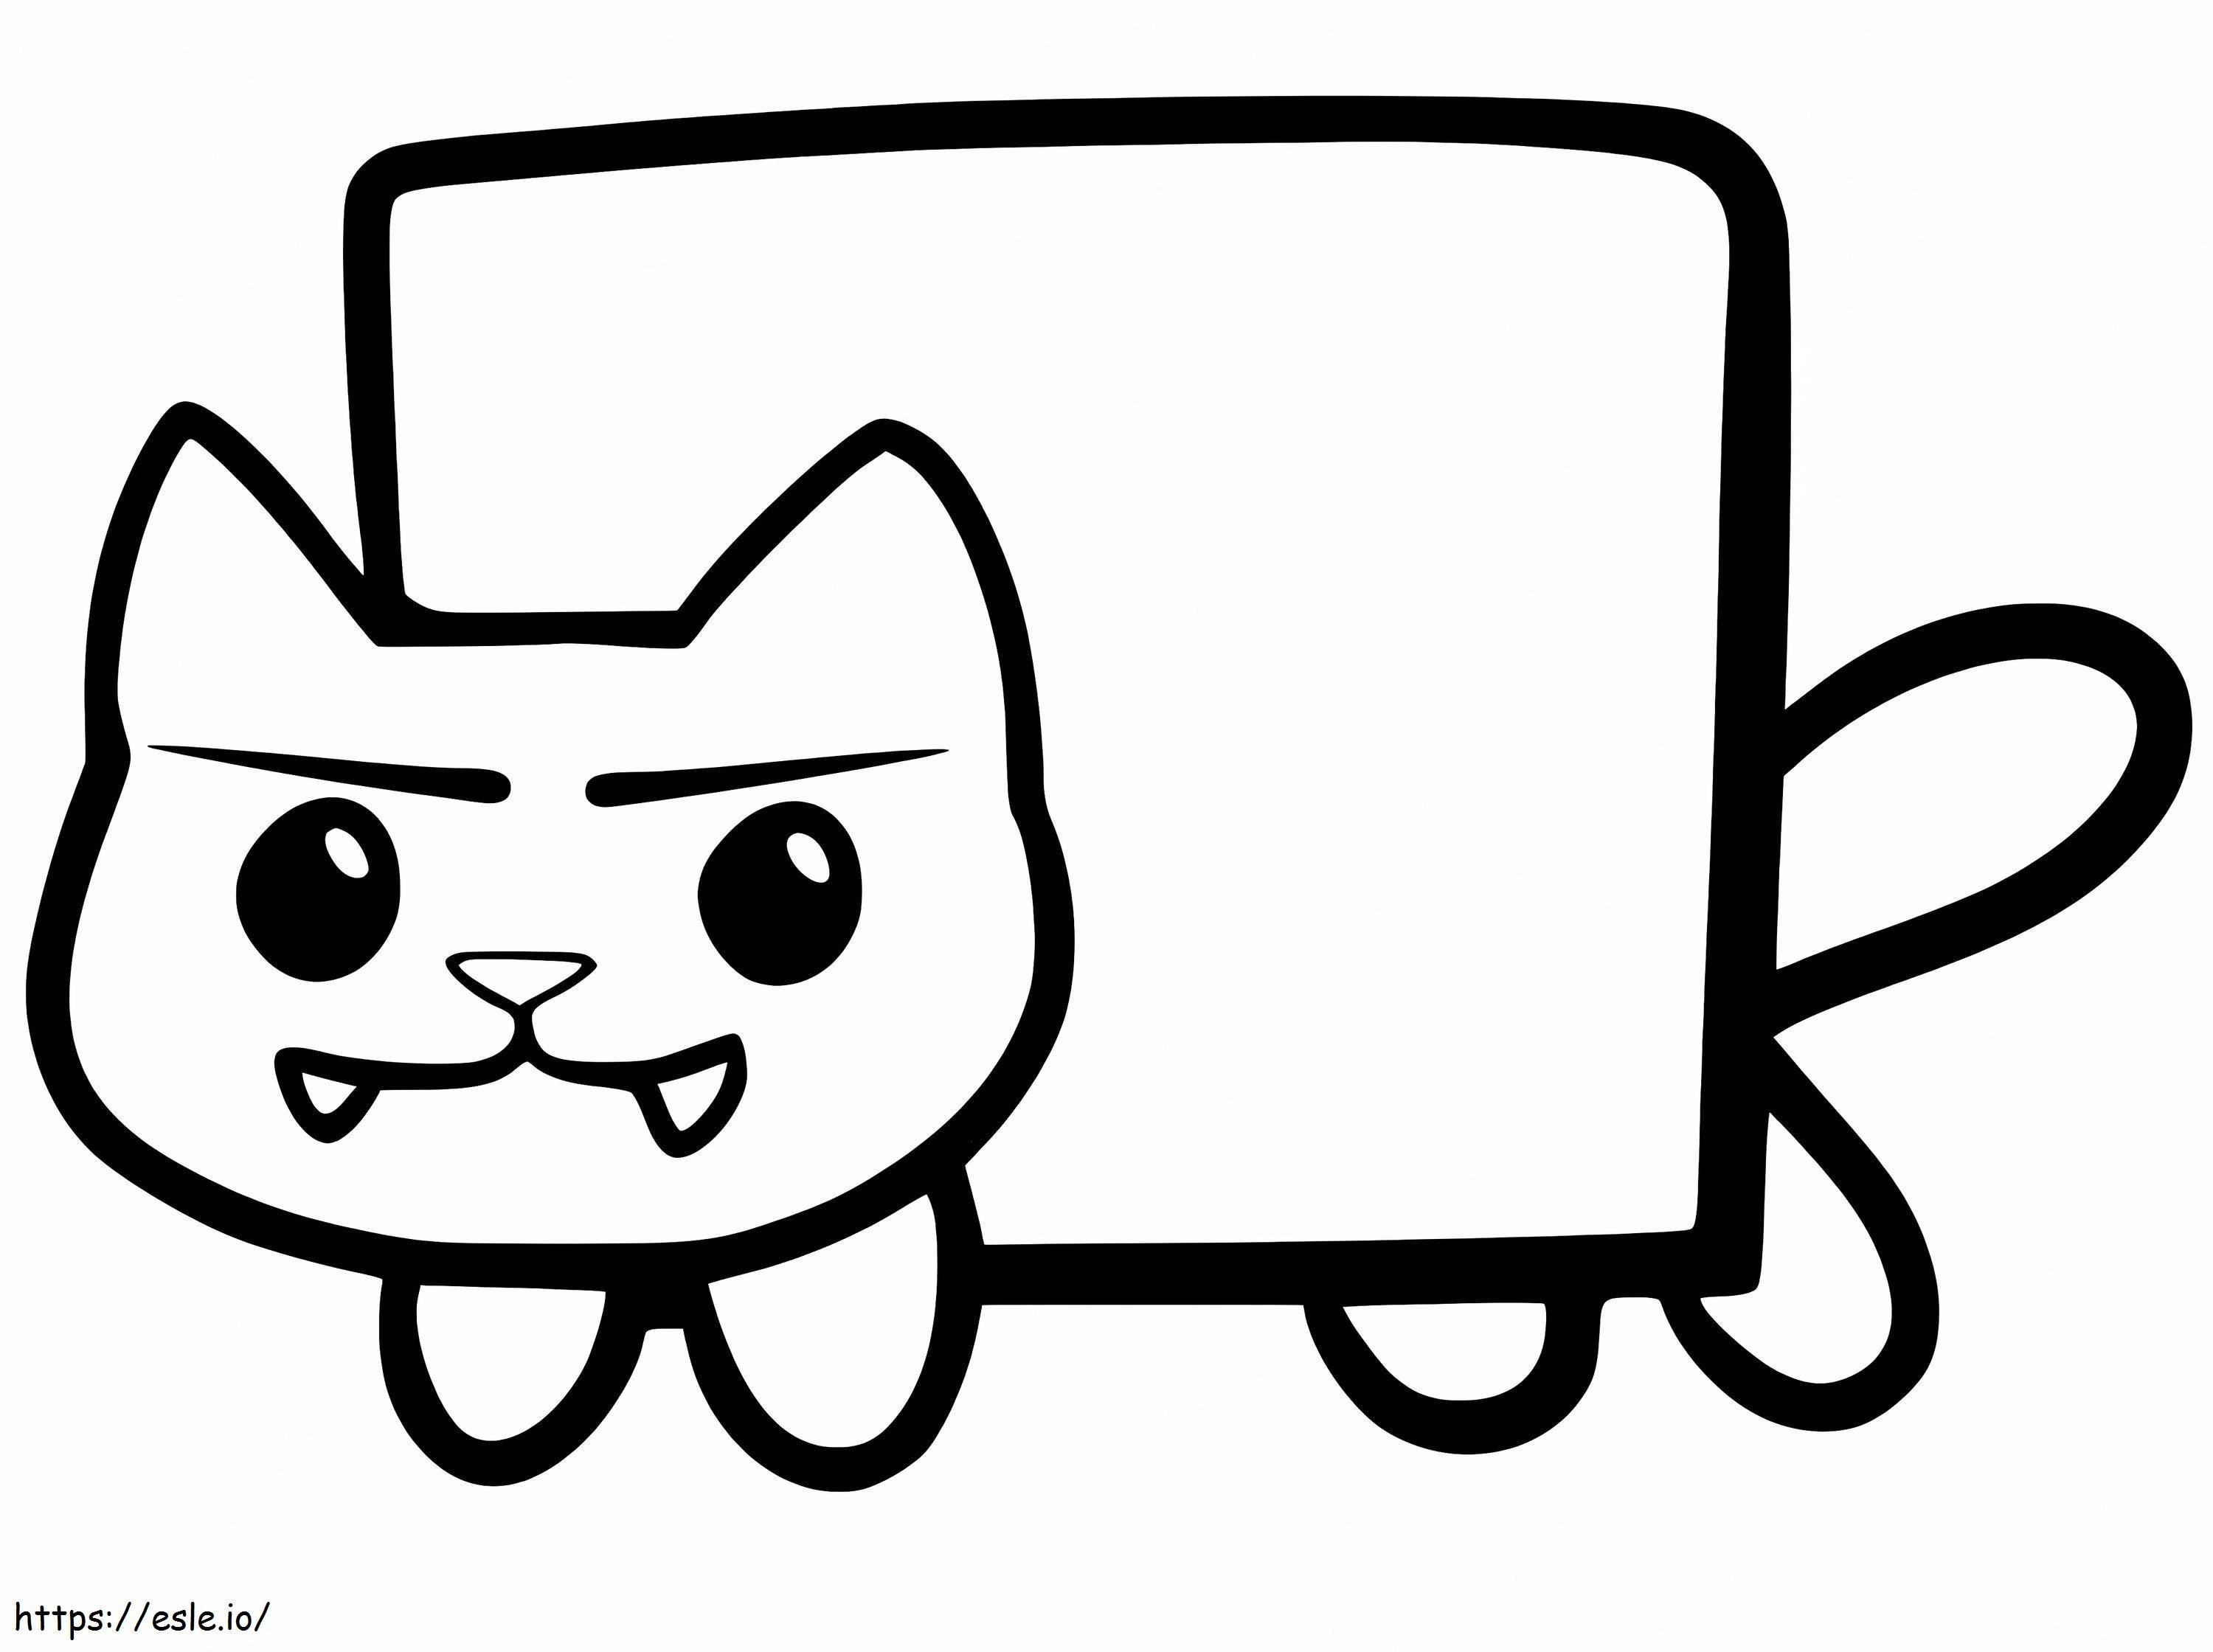 Böse Nyan-Katze ausmalbilder